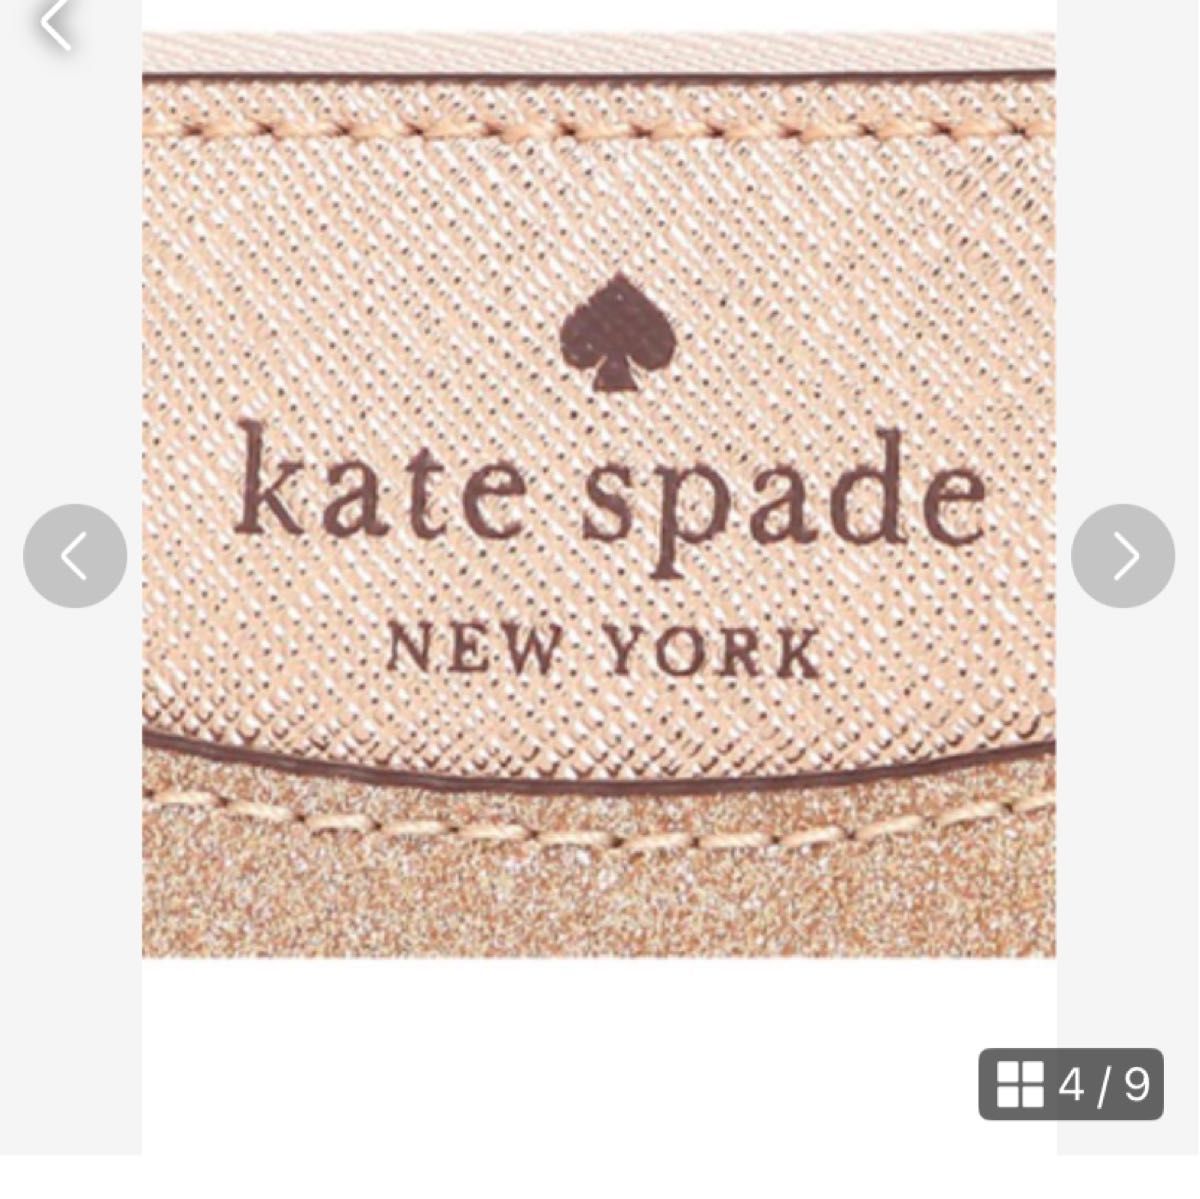 Kate spade NEW YORK ショルダーバッグ